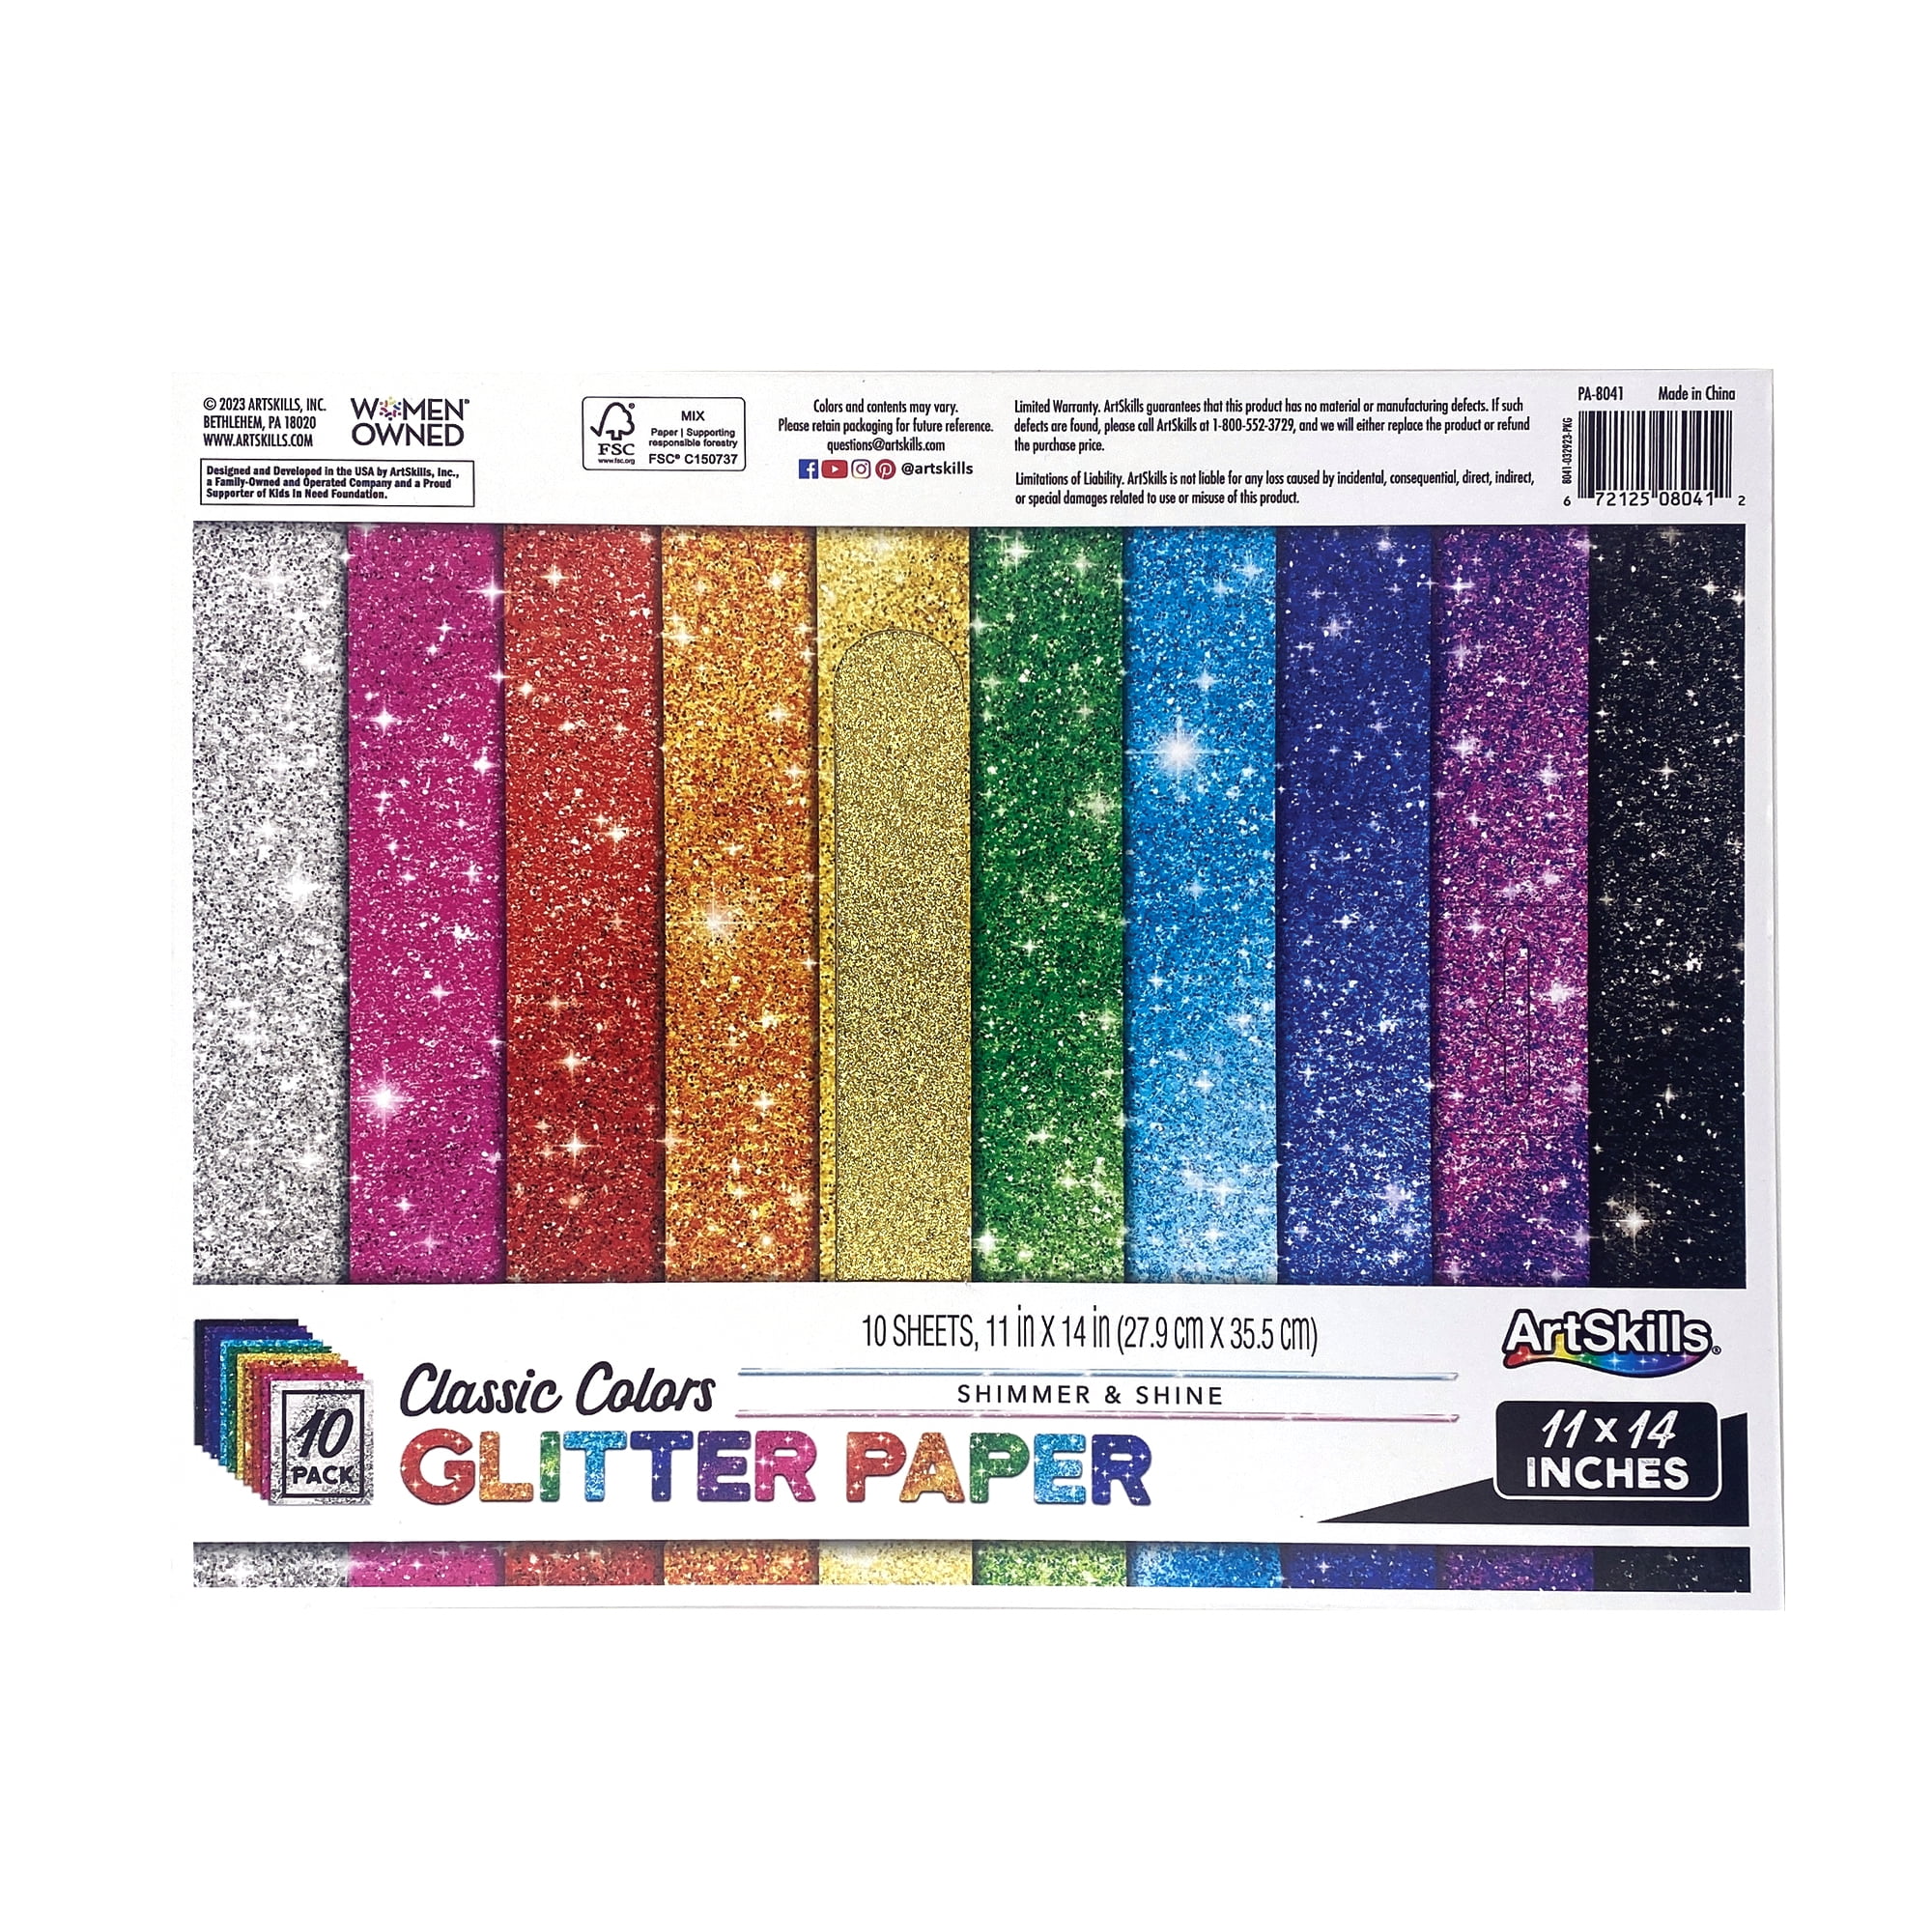 ArtSkills Glitter Paper - Shop Construction & Craft Paper at H-E-B